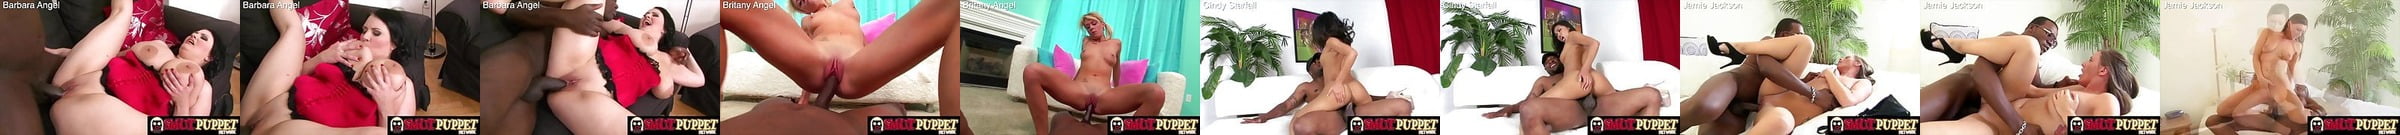 Cindy Starfall Free Porn Star Videos 237 Xhamster